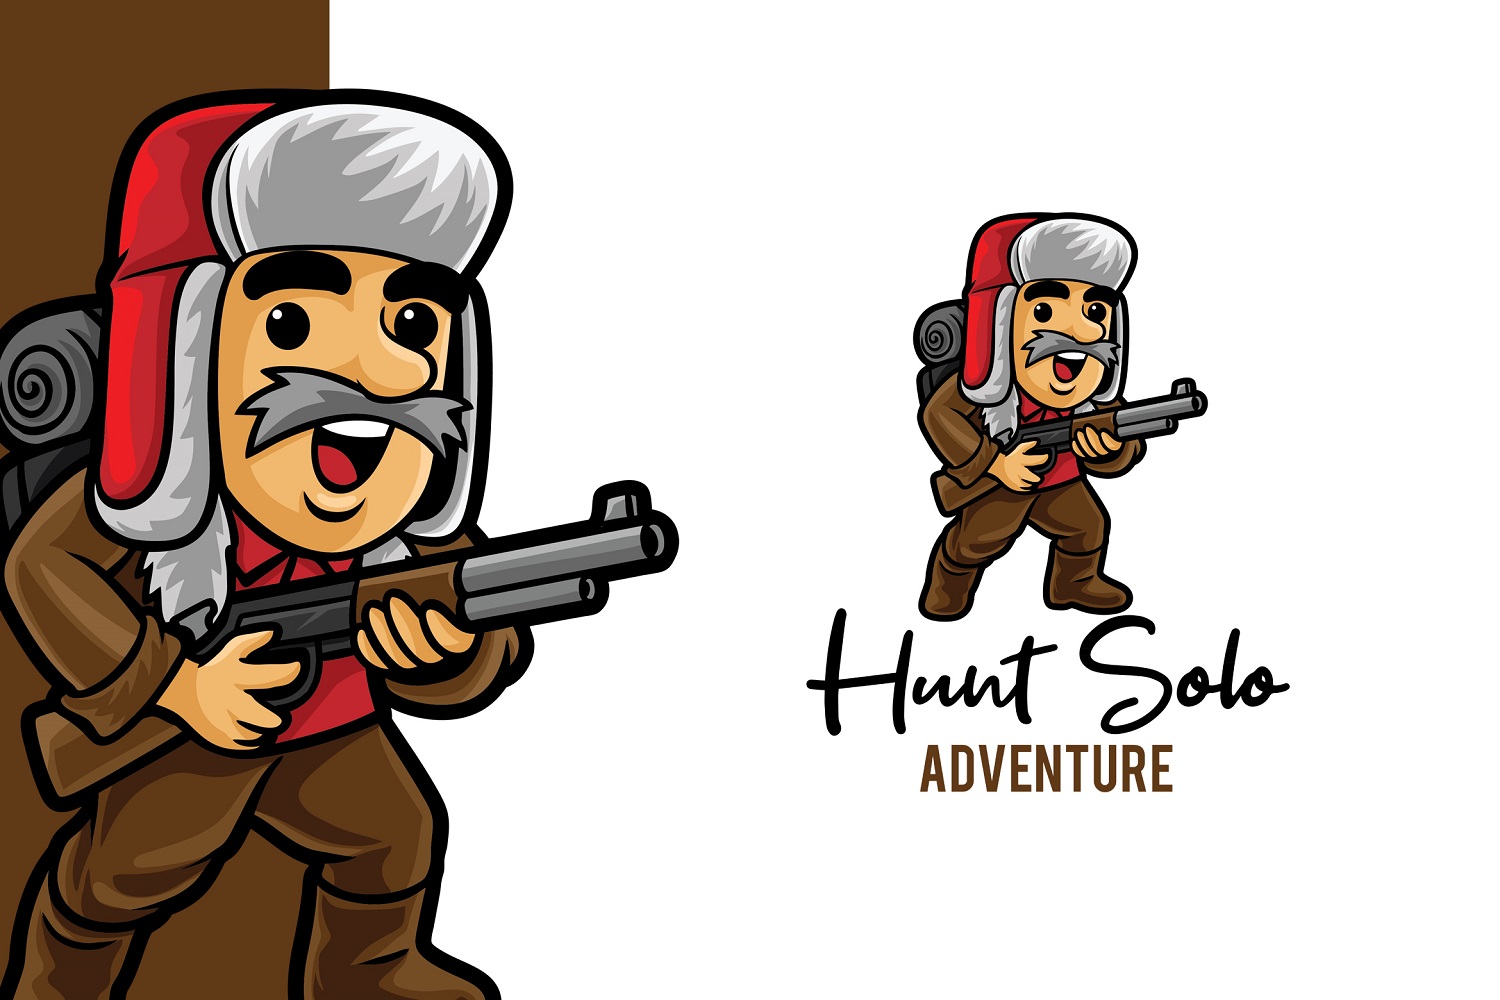 Solo adventure. Hunter logo. Solo Adventures.